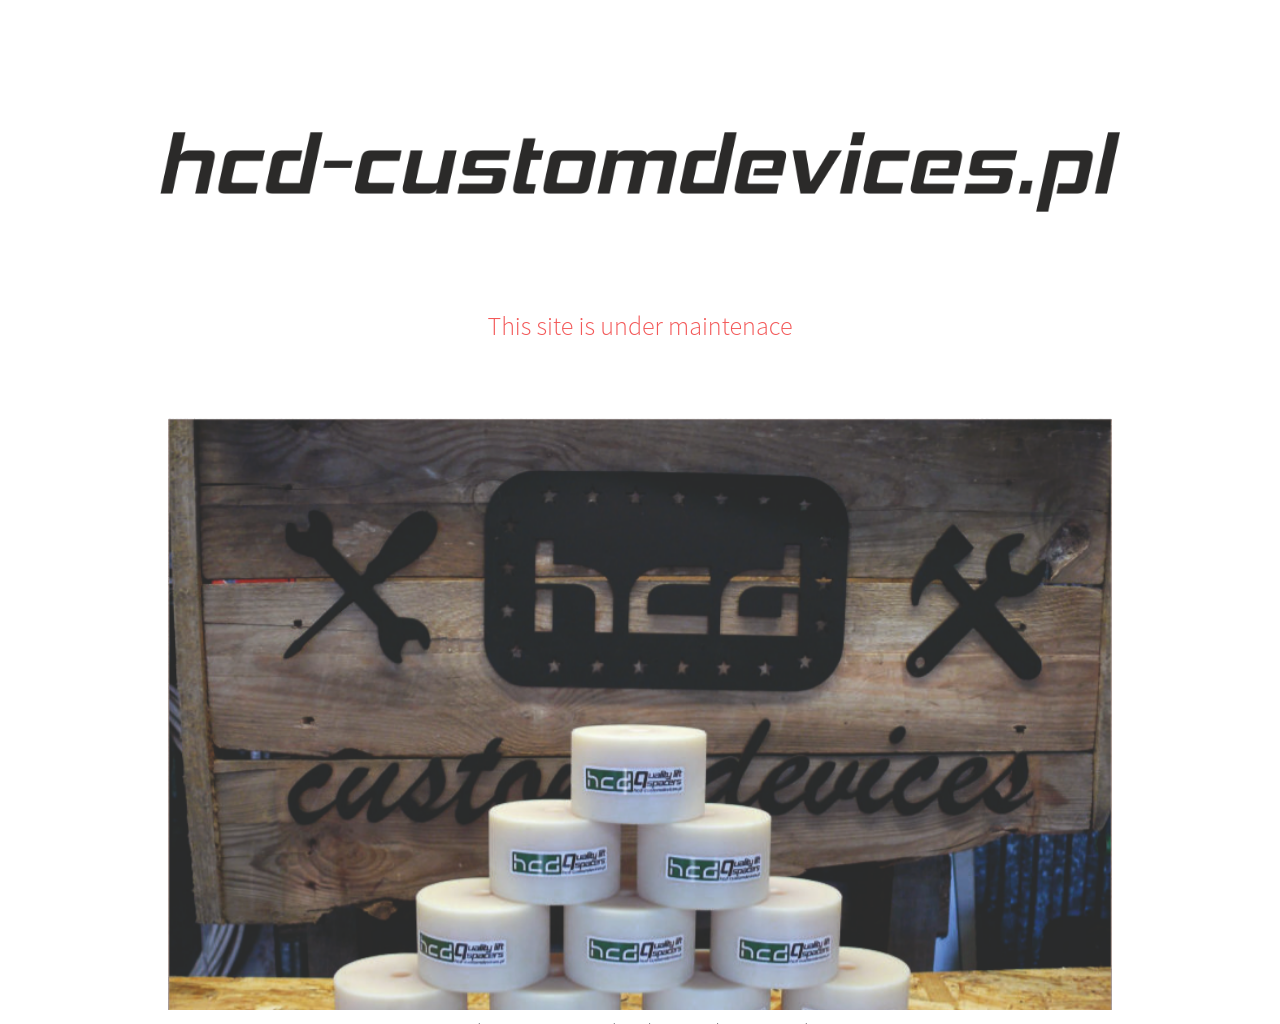 hcd-customdevices.pl